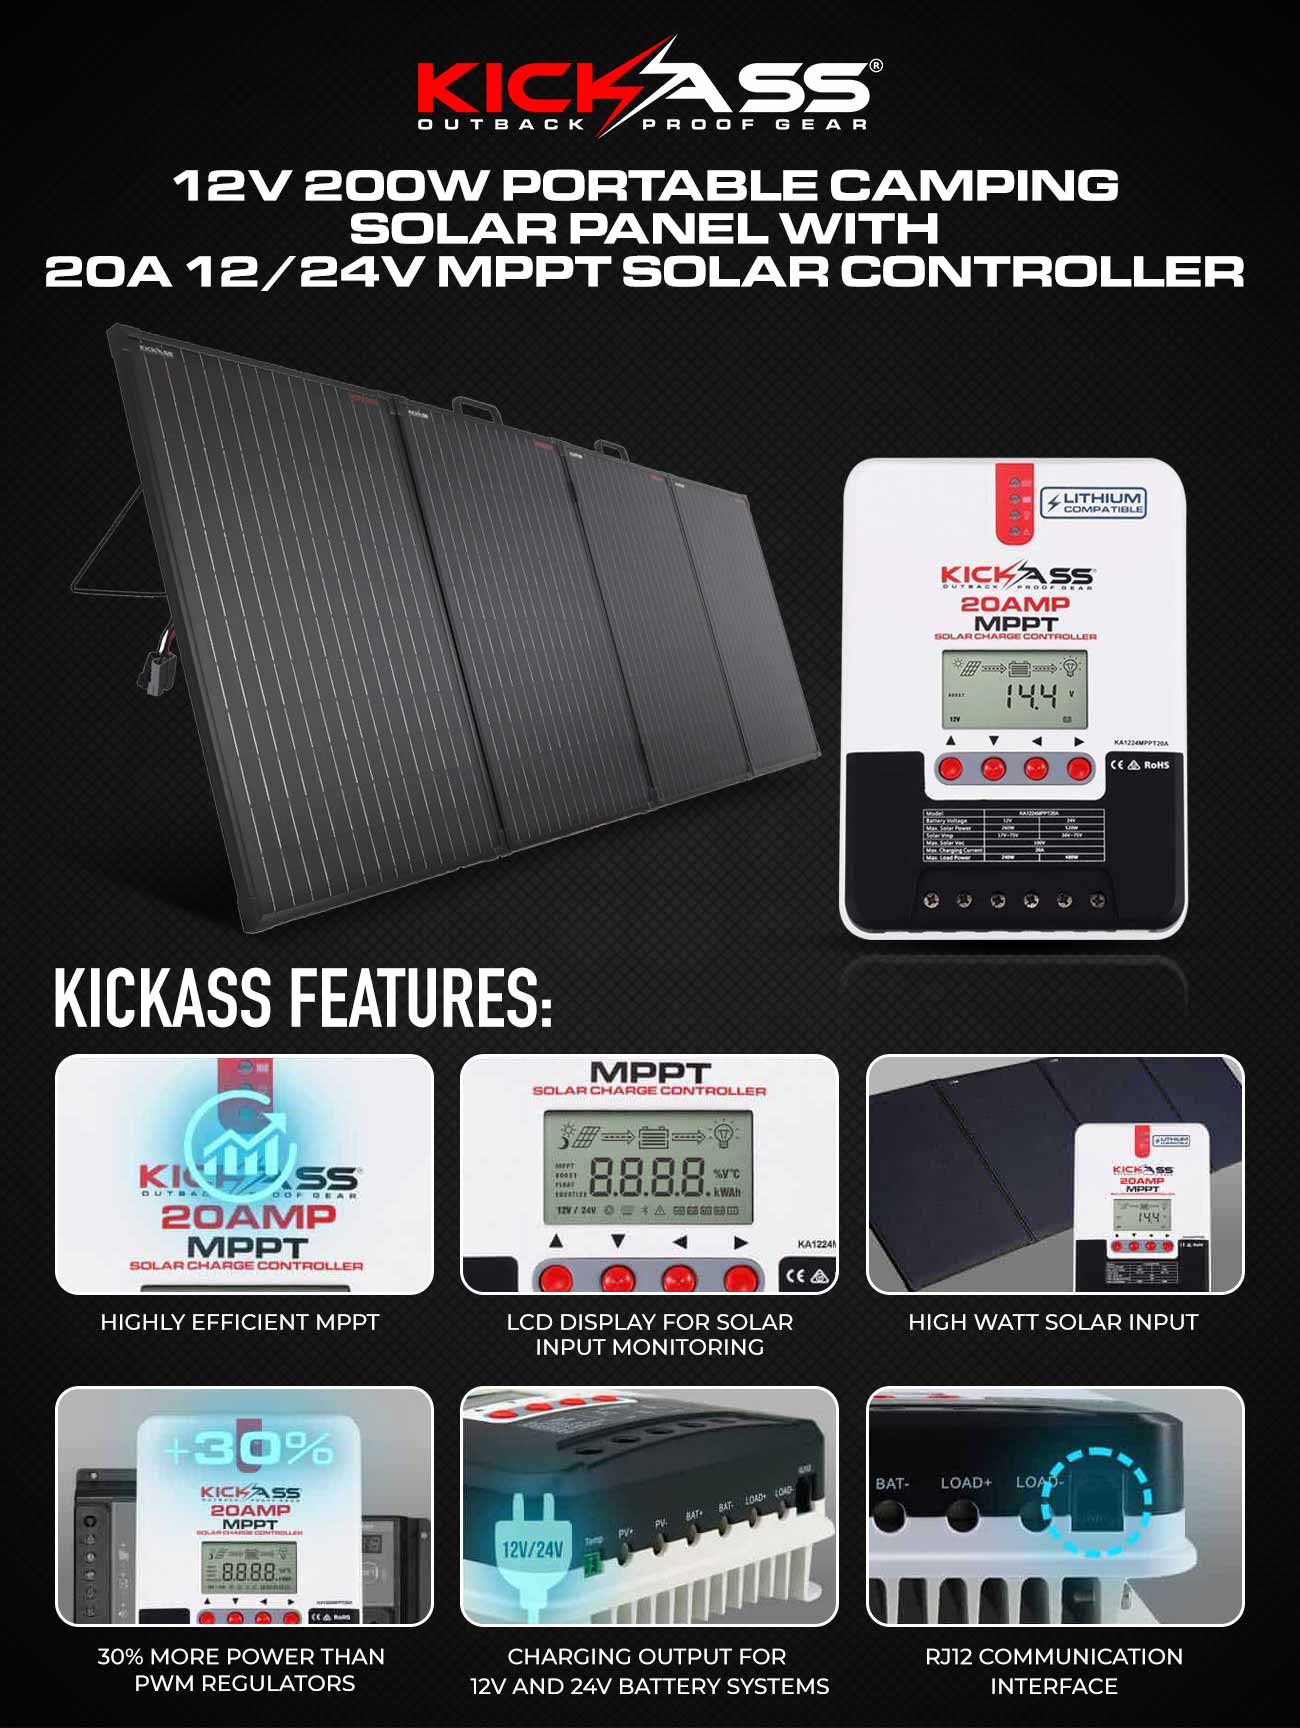 KICKASS 12V 200W Portable Camping Solar Panel With 40A 12/24V MPPT Solar Controller